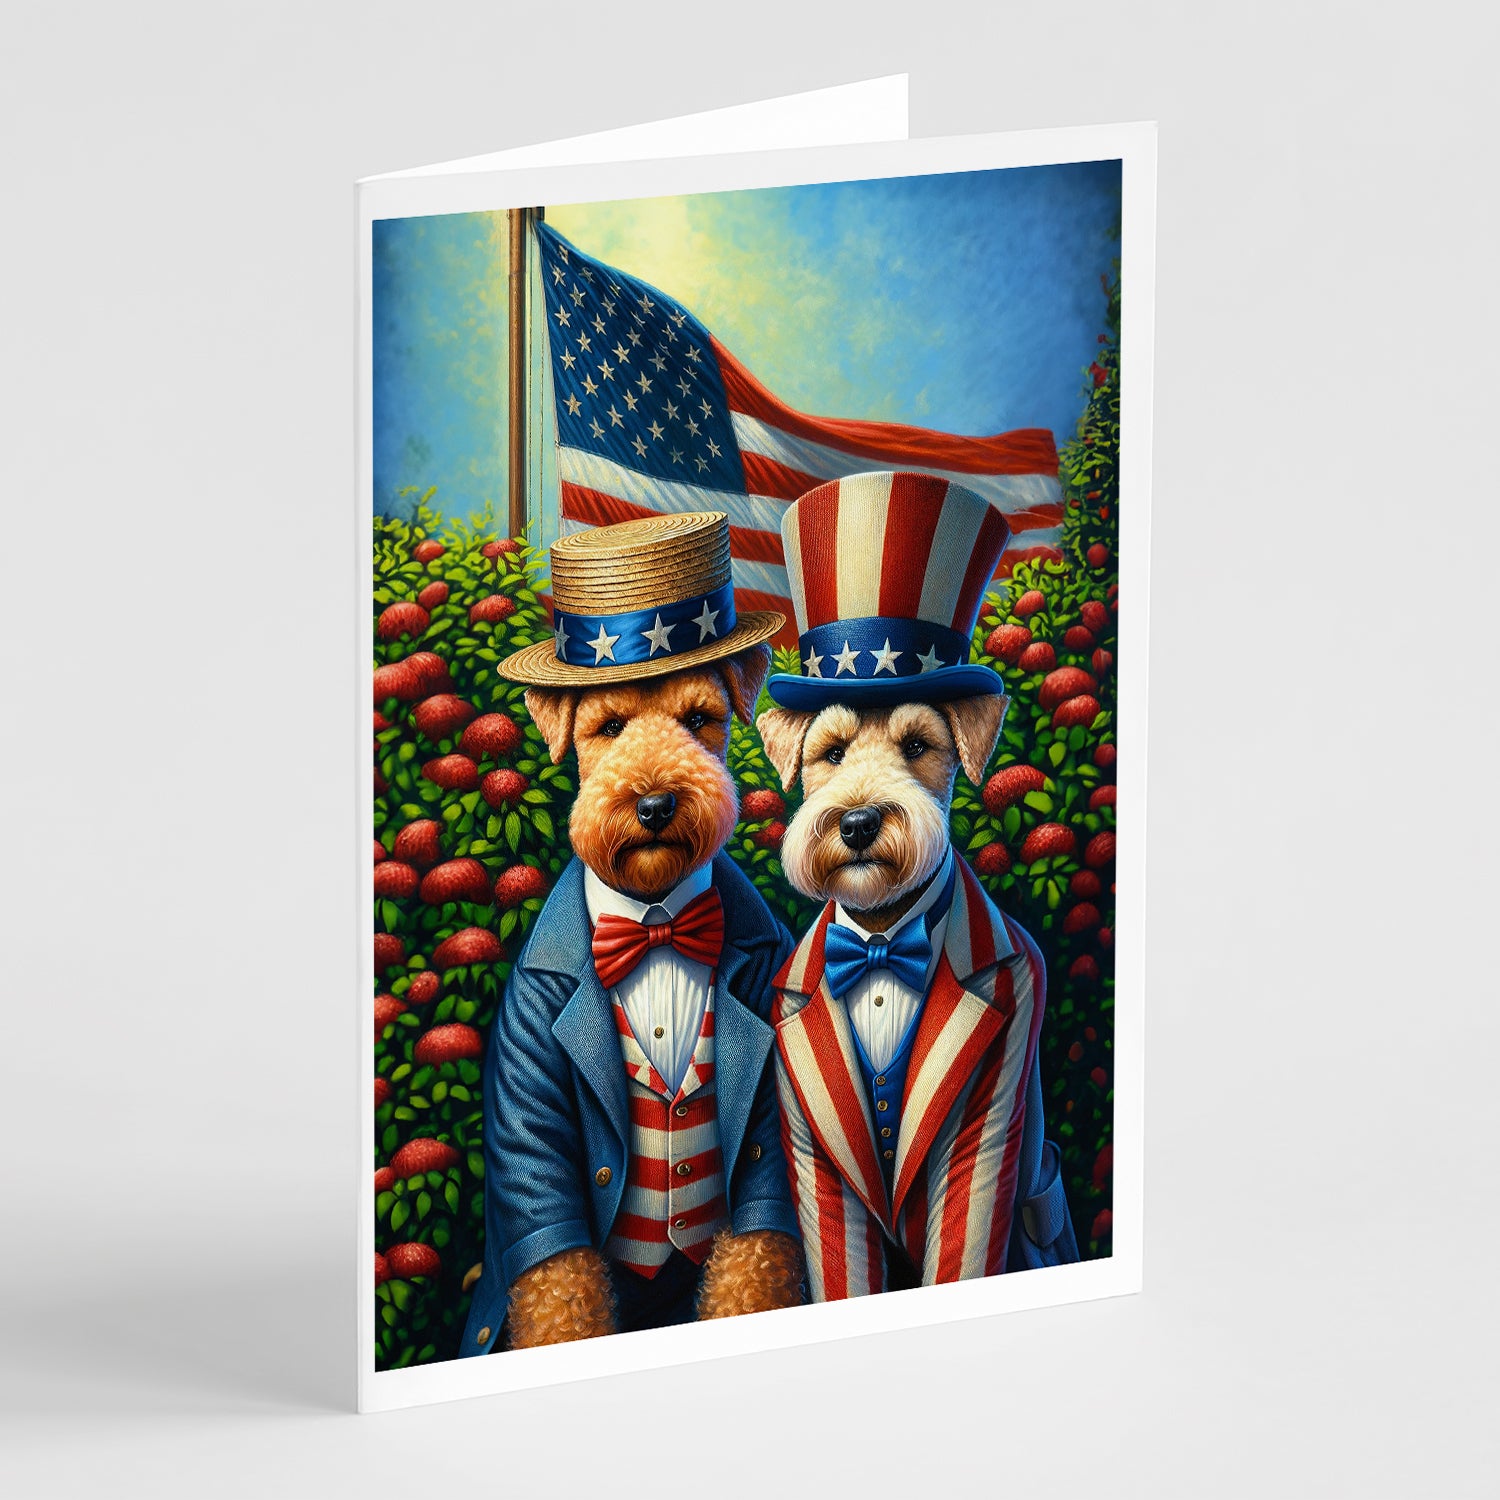 Buy this All American Lakeland Terrier Greeting Cards Pack of 8